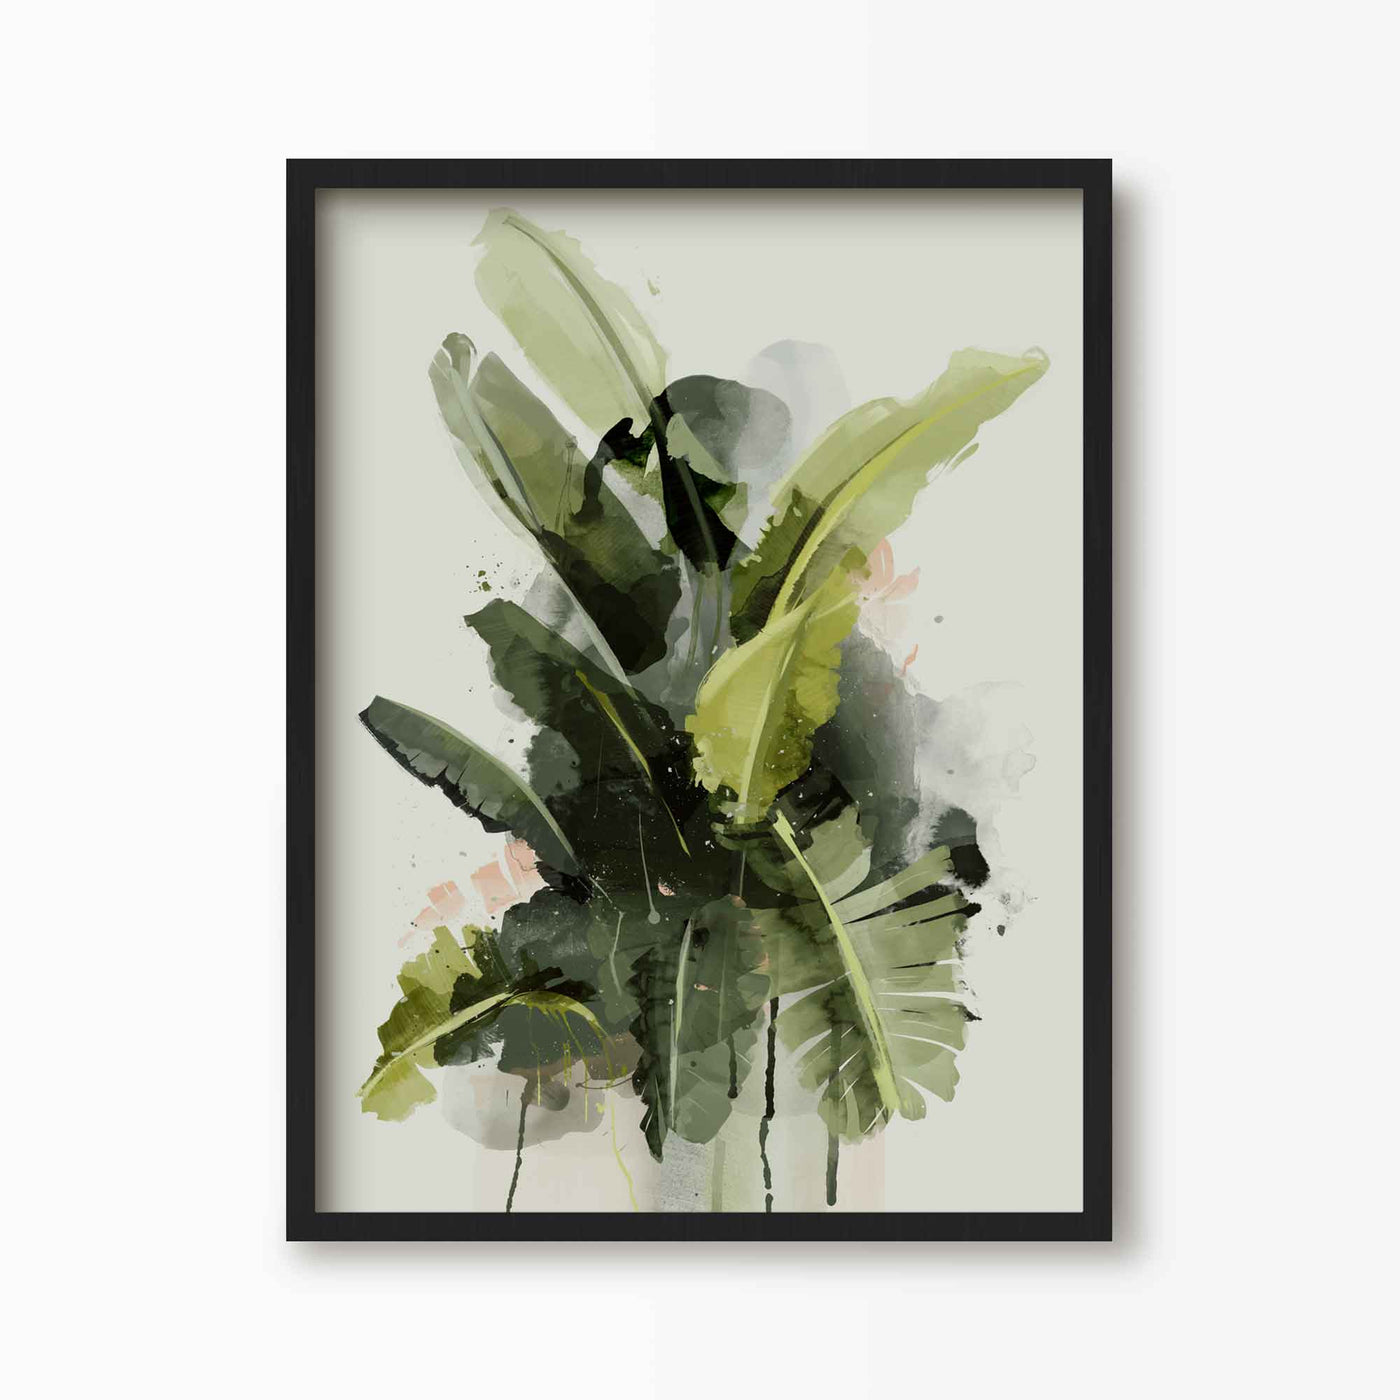 Green Lili 30x40cm (12x16") / Black Frame Abstract Banana Leaf Art Print